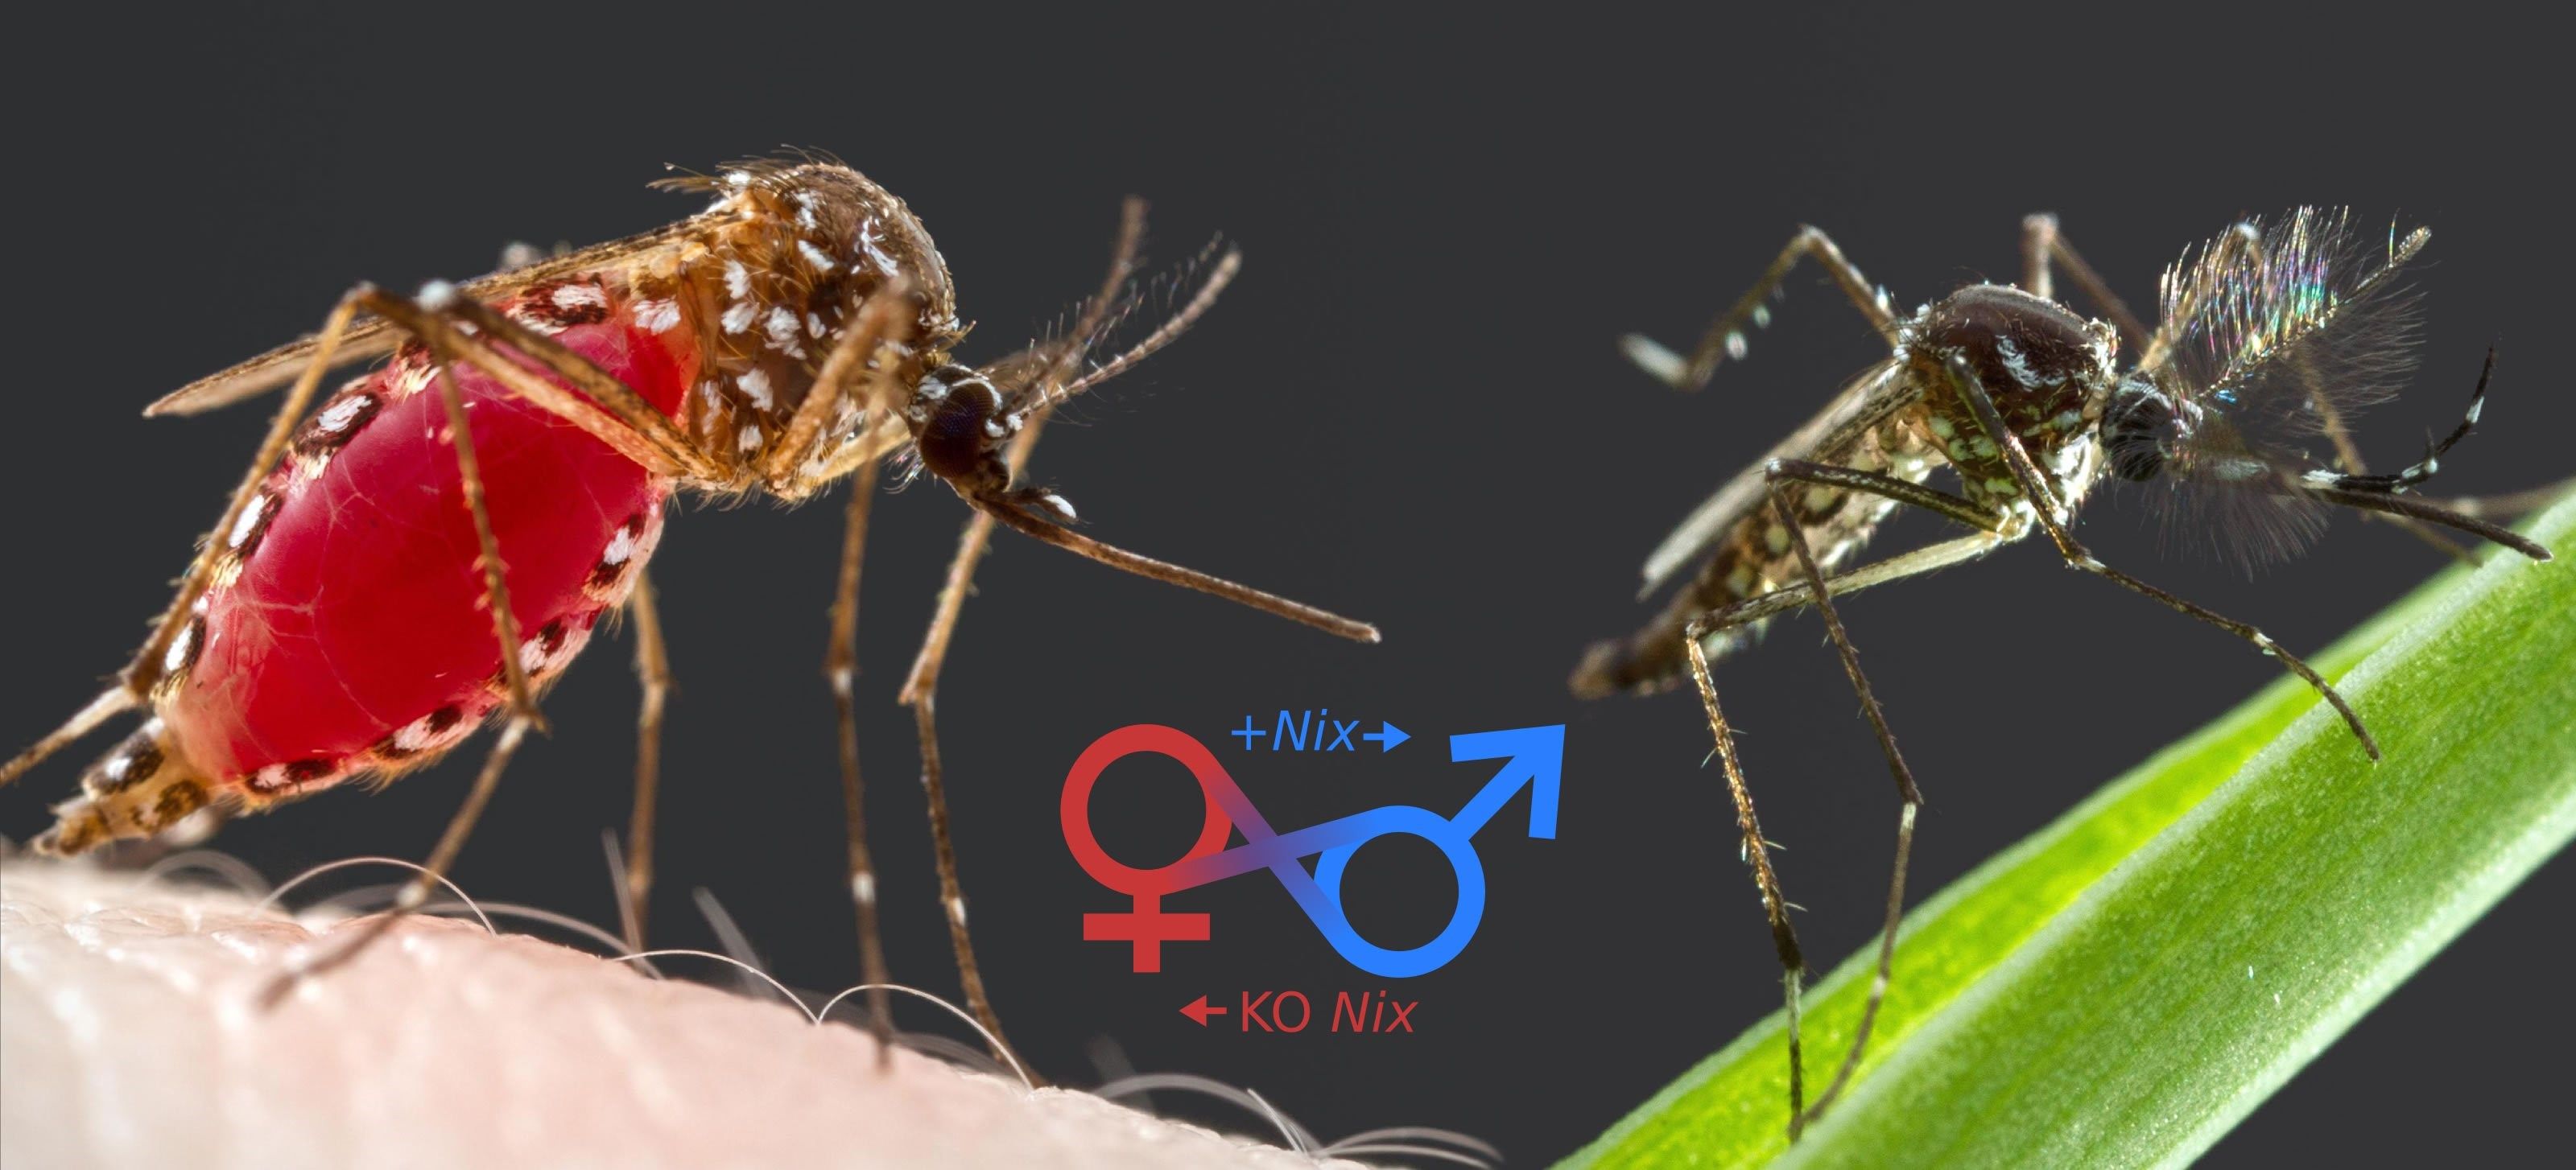 Самец комара фото как выглядит